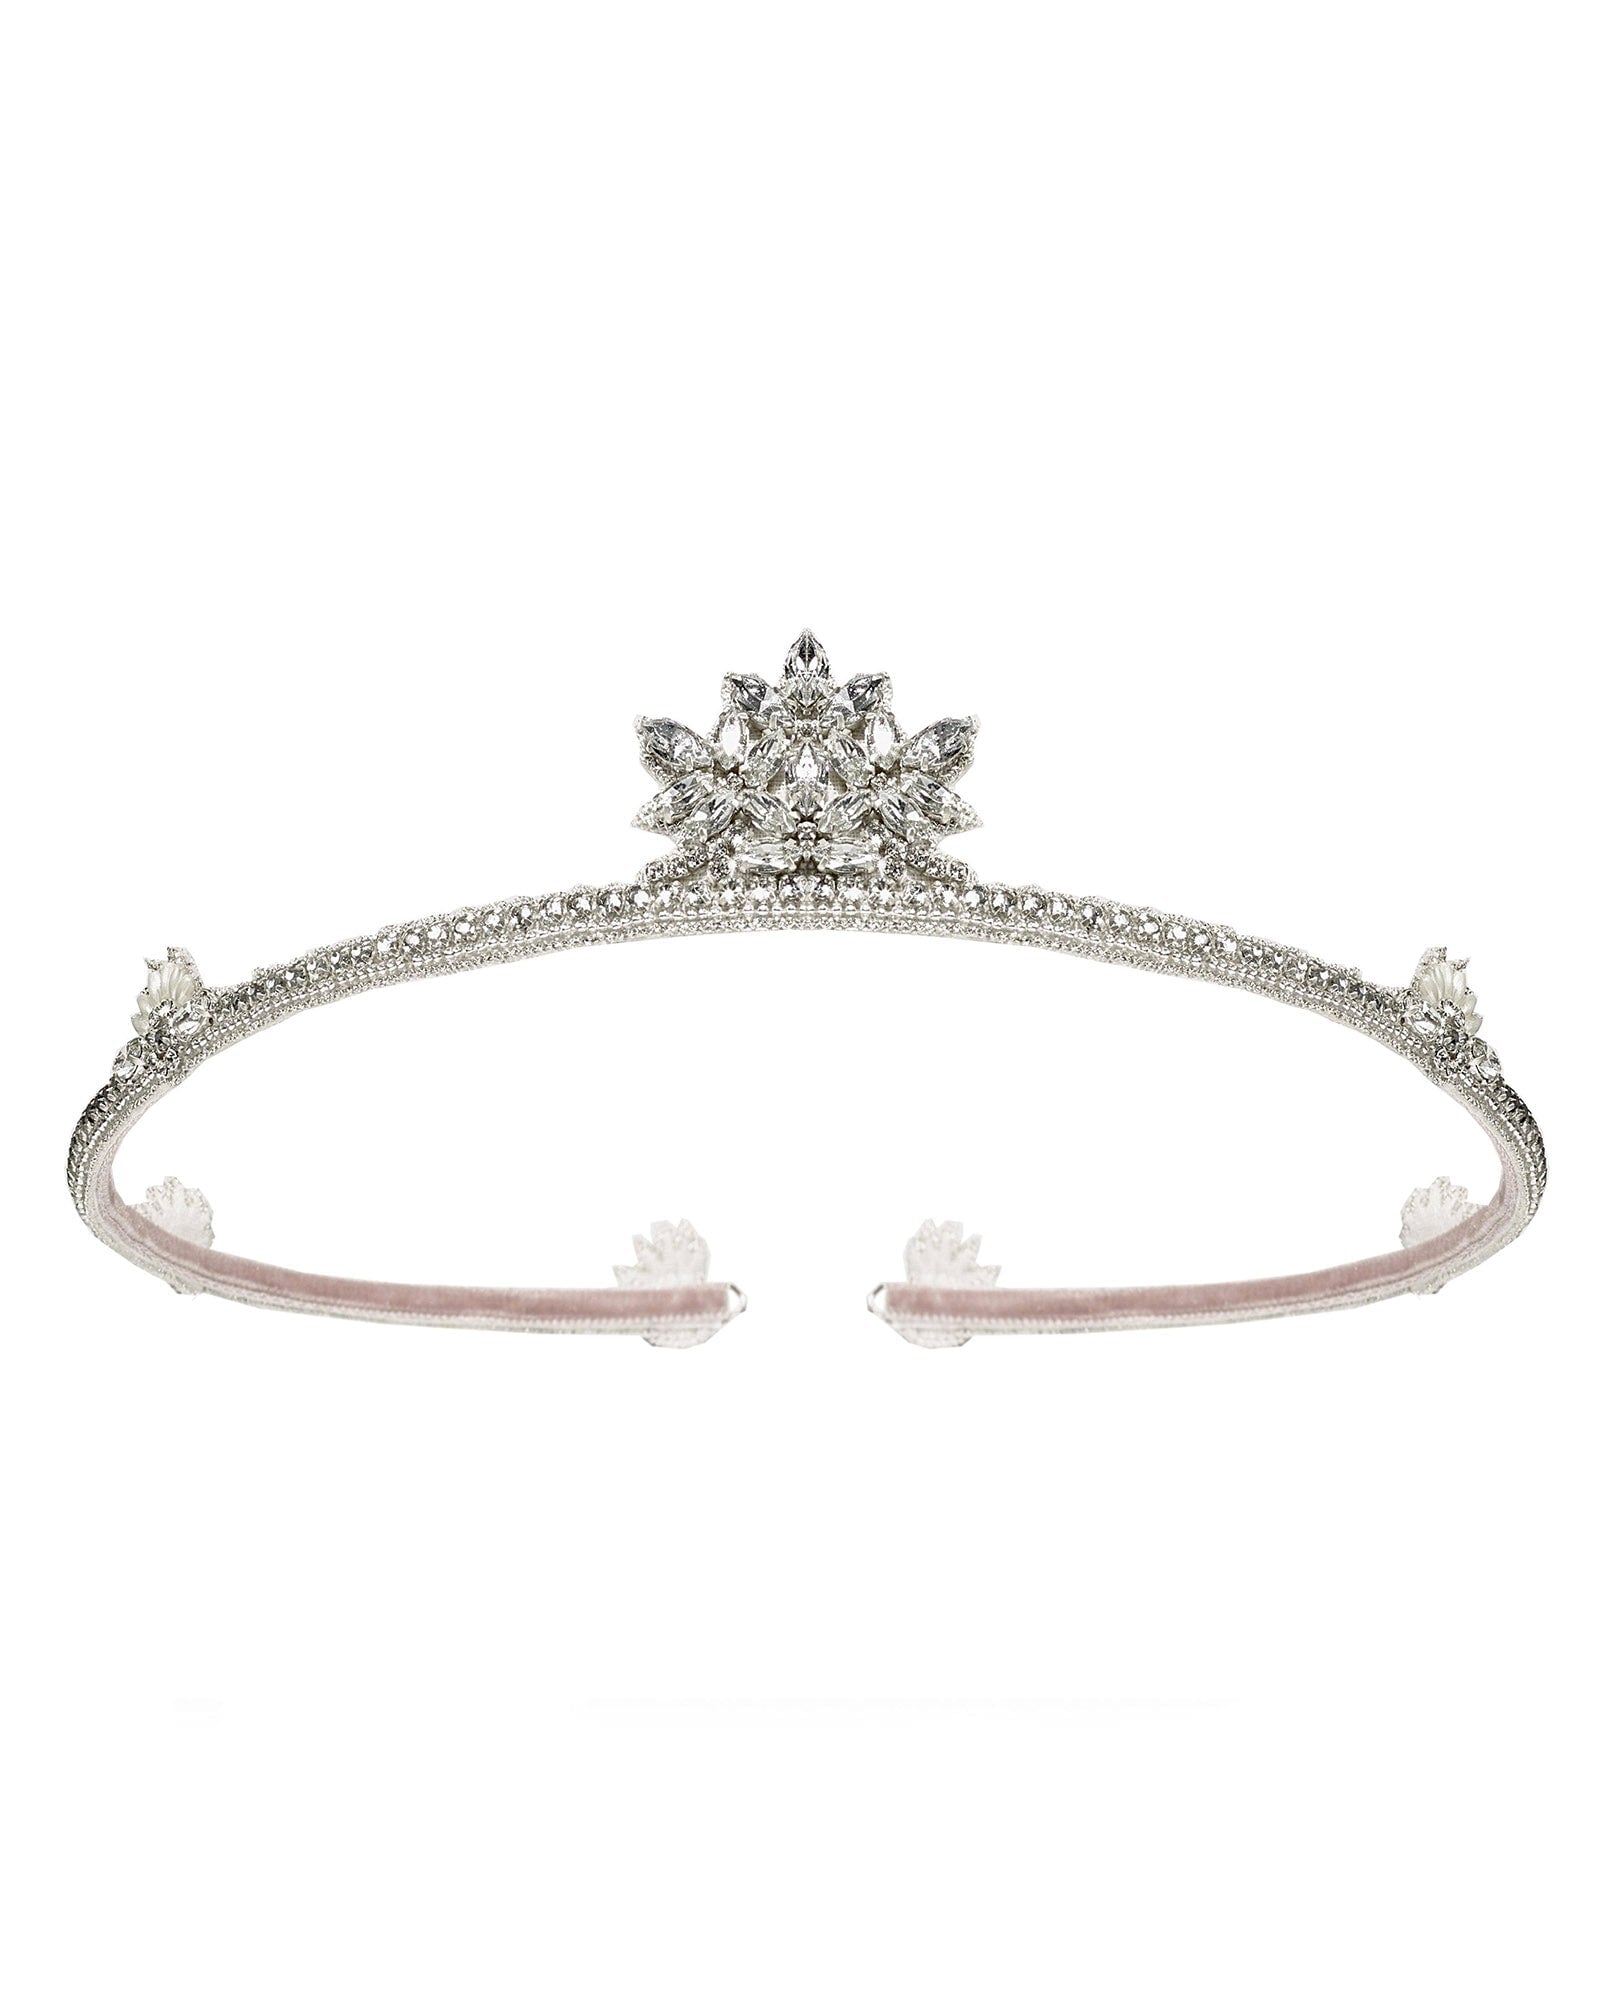 Porto Crown Bridal Hair Accessory Silver Tiara Style Headdress  image